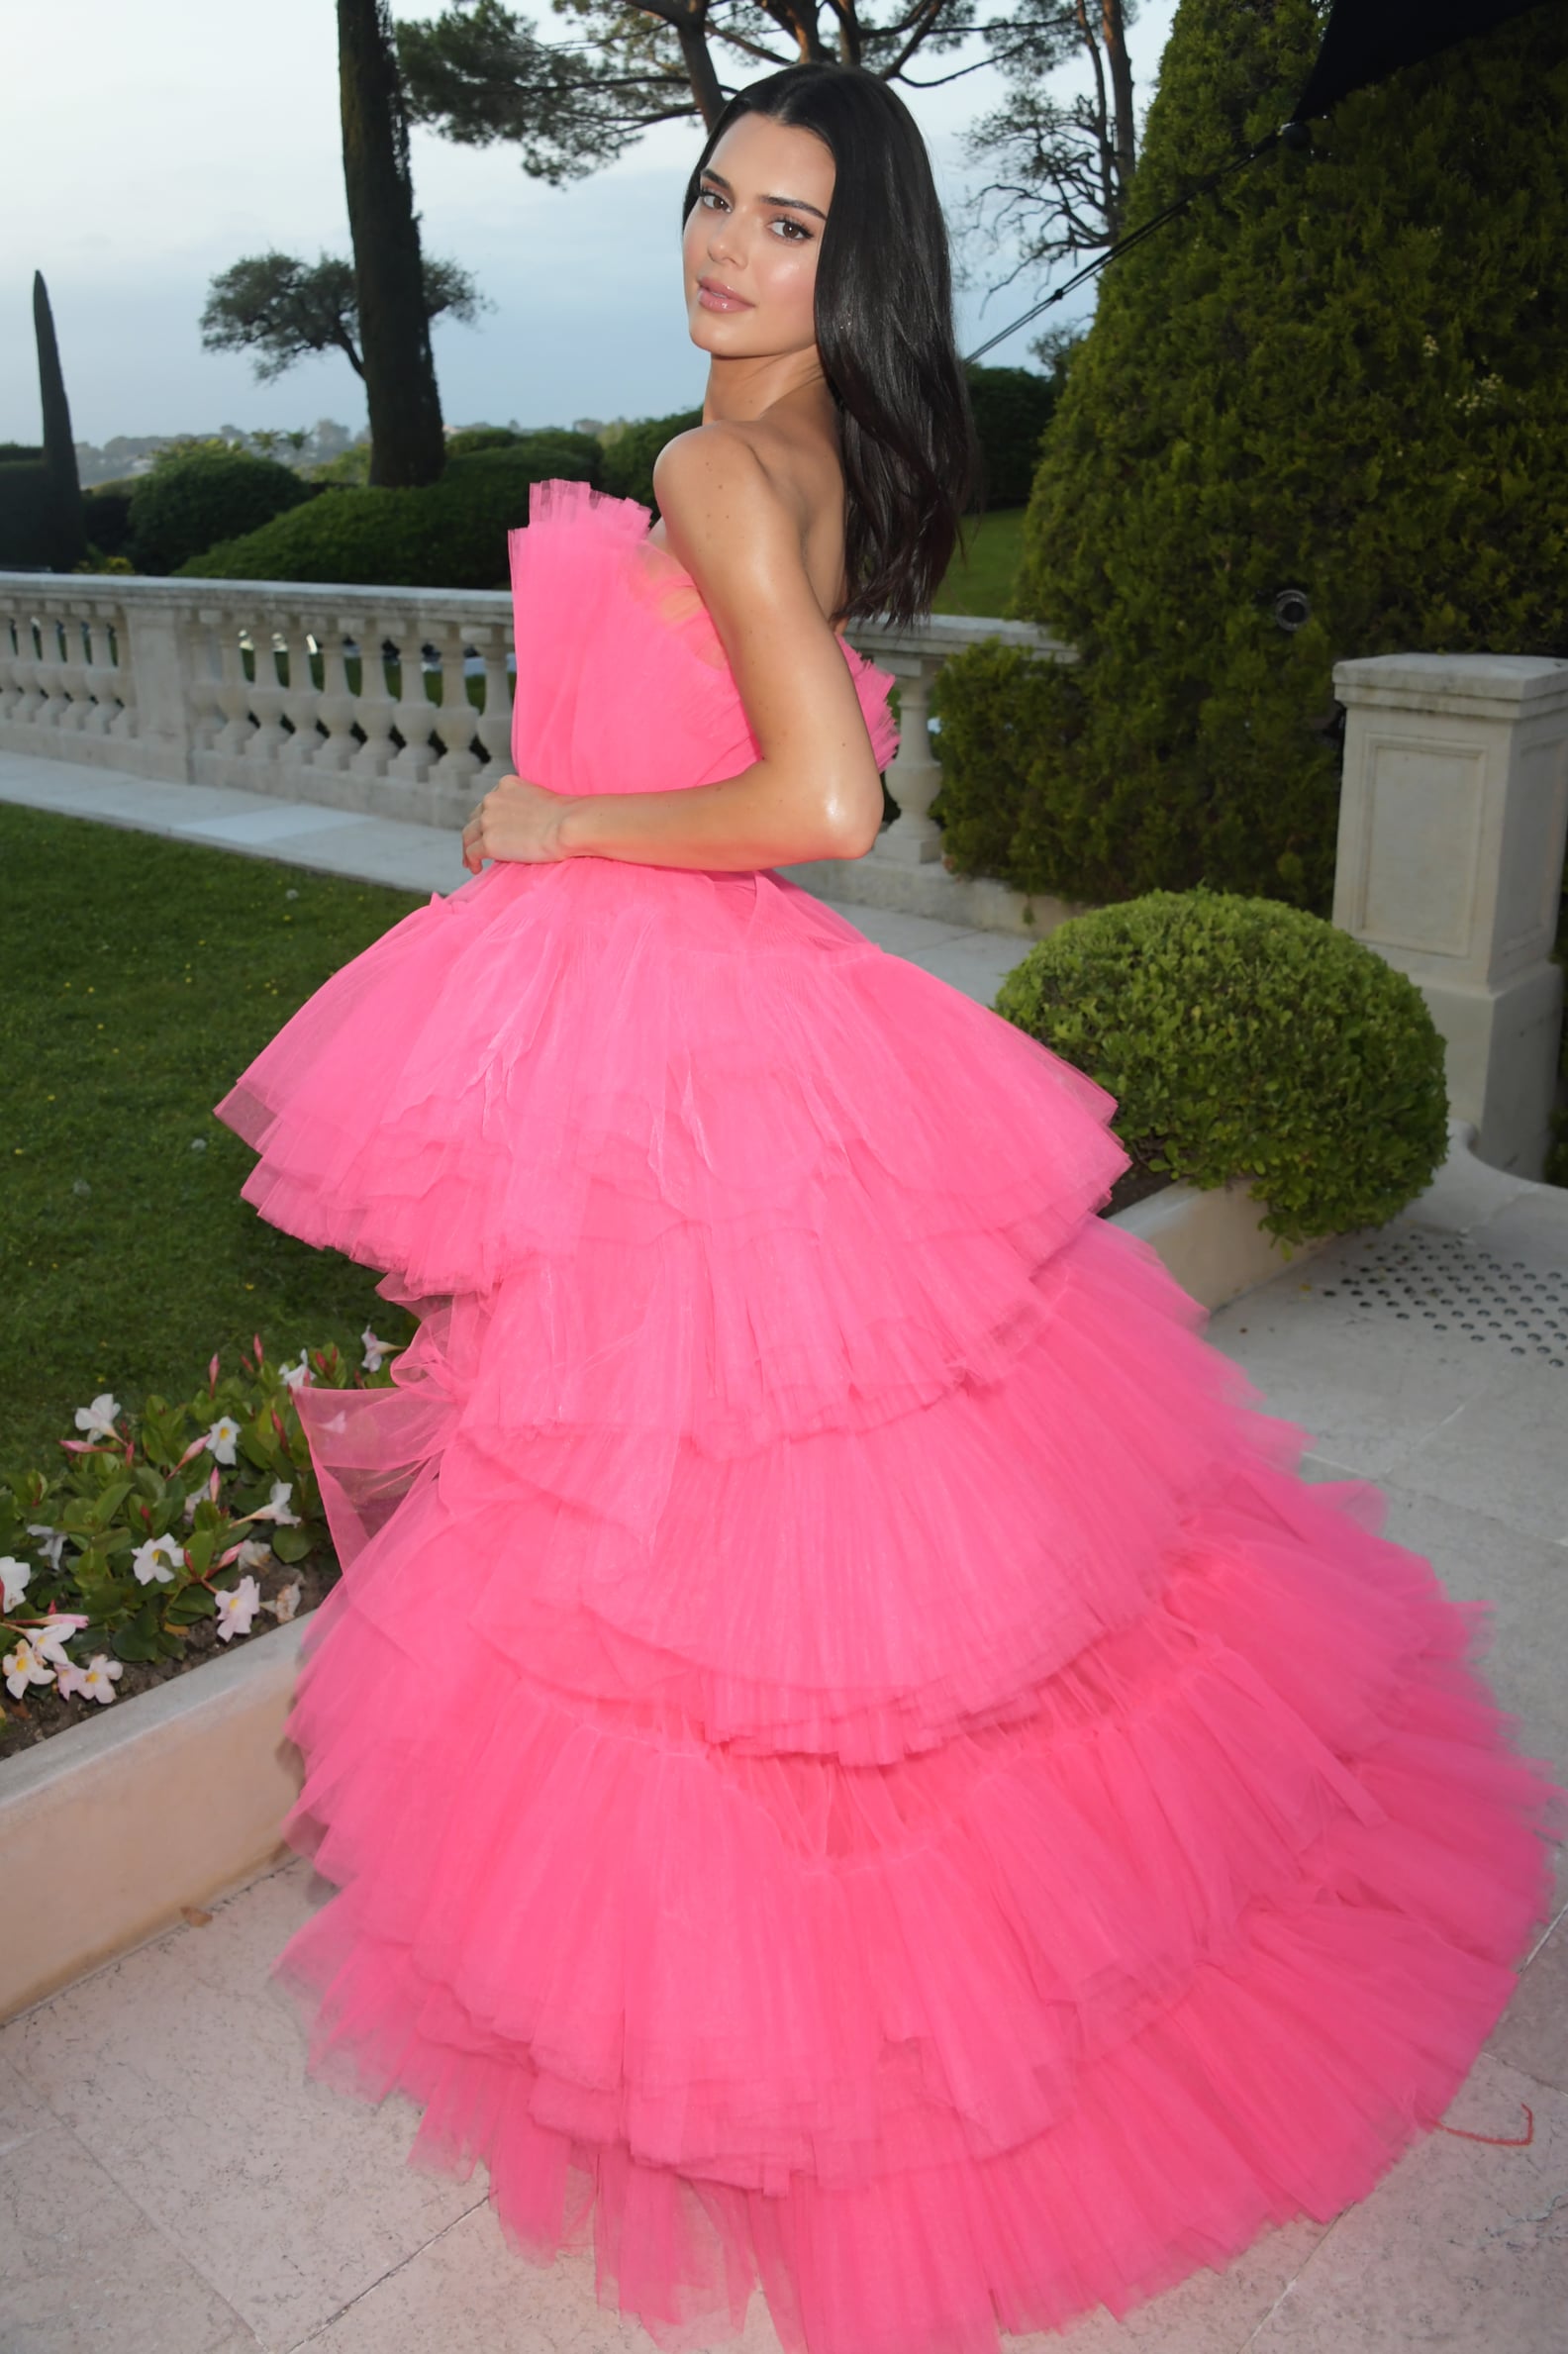 Kendall Jenner Giambattista Valli Pink Dress At Cannes 2019 Popsugar Fashion 6296